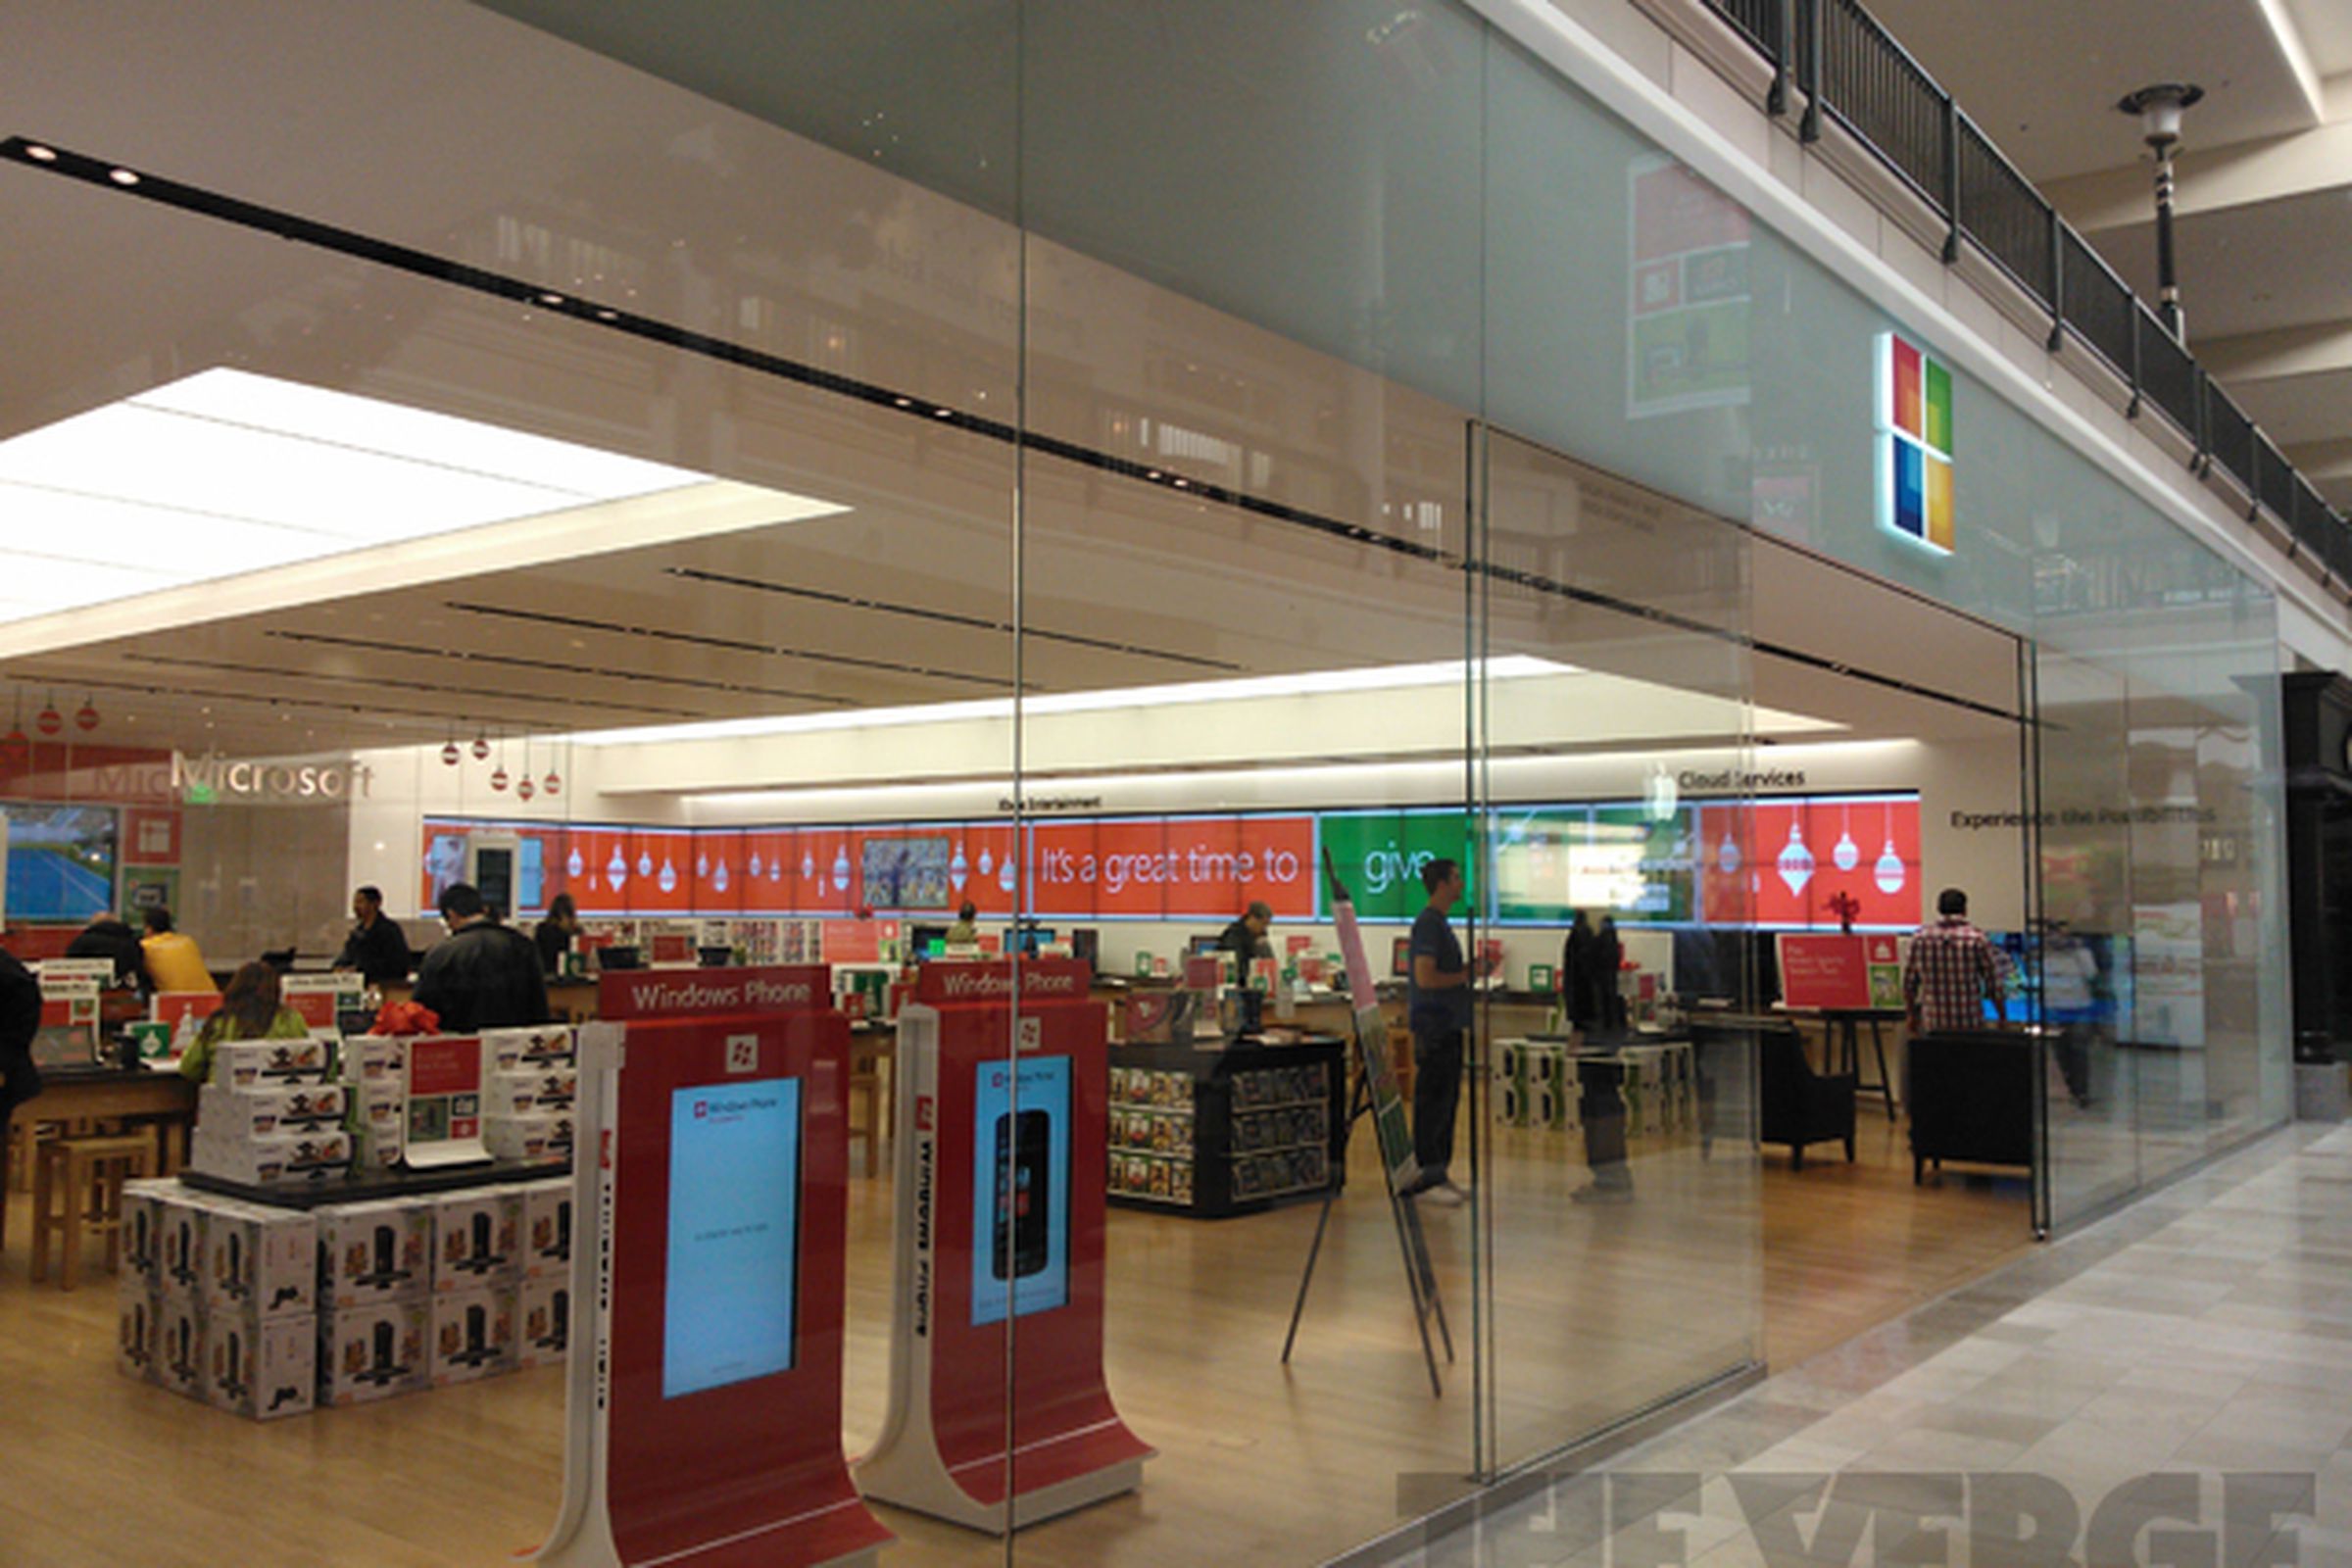 Microsoft Store stock